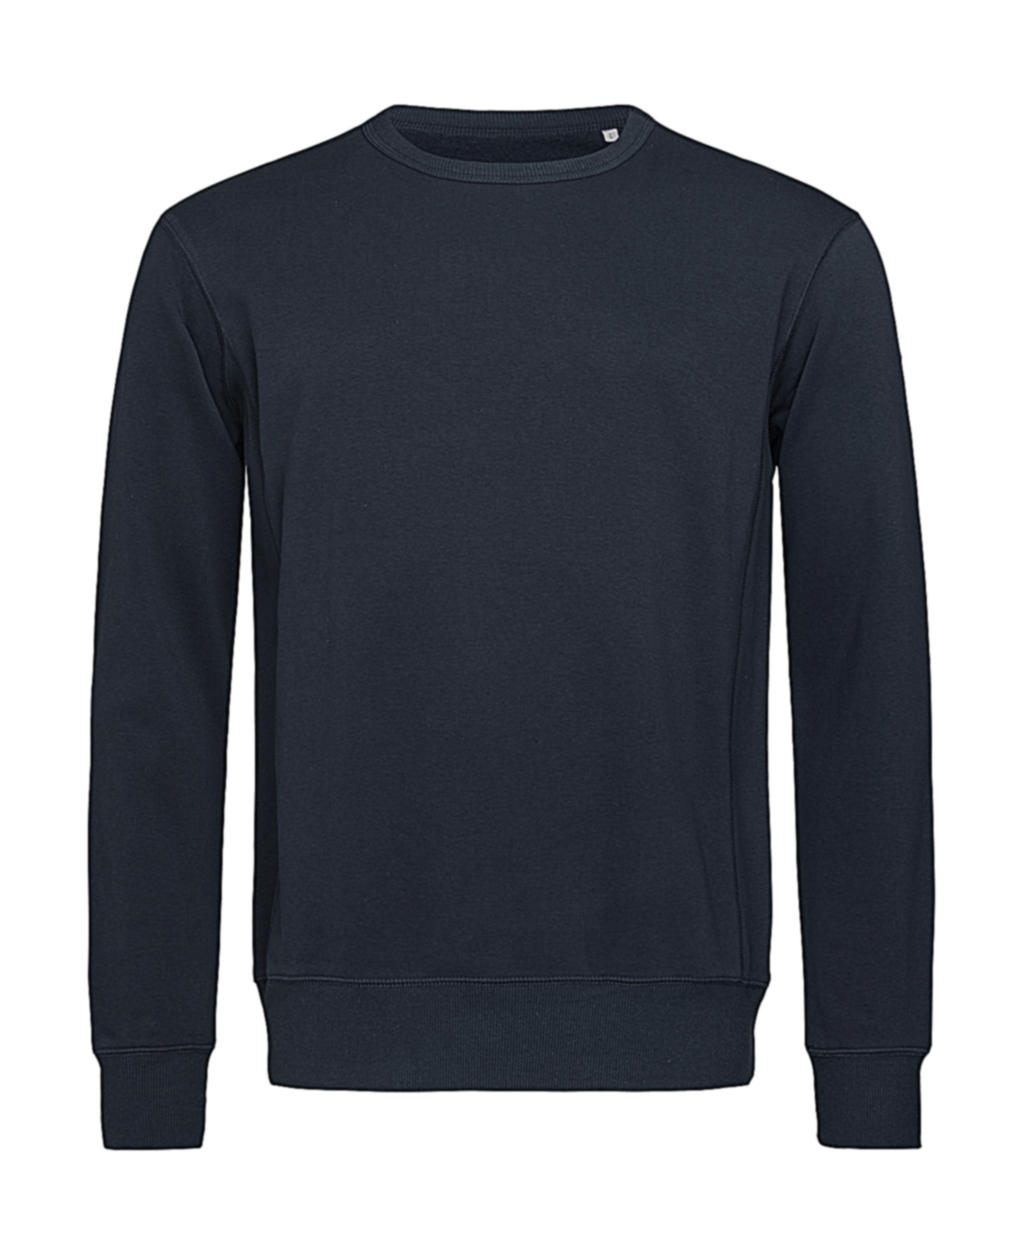  Sweatshirt Select in Farbe Blue Midnight